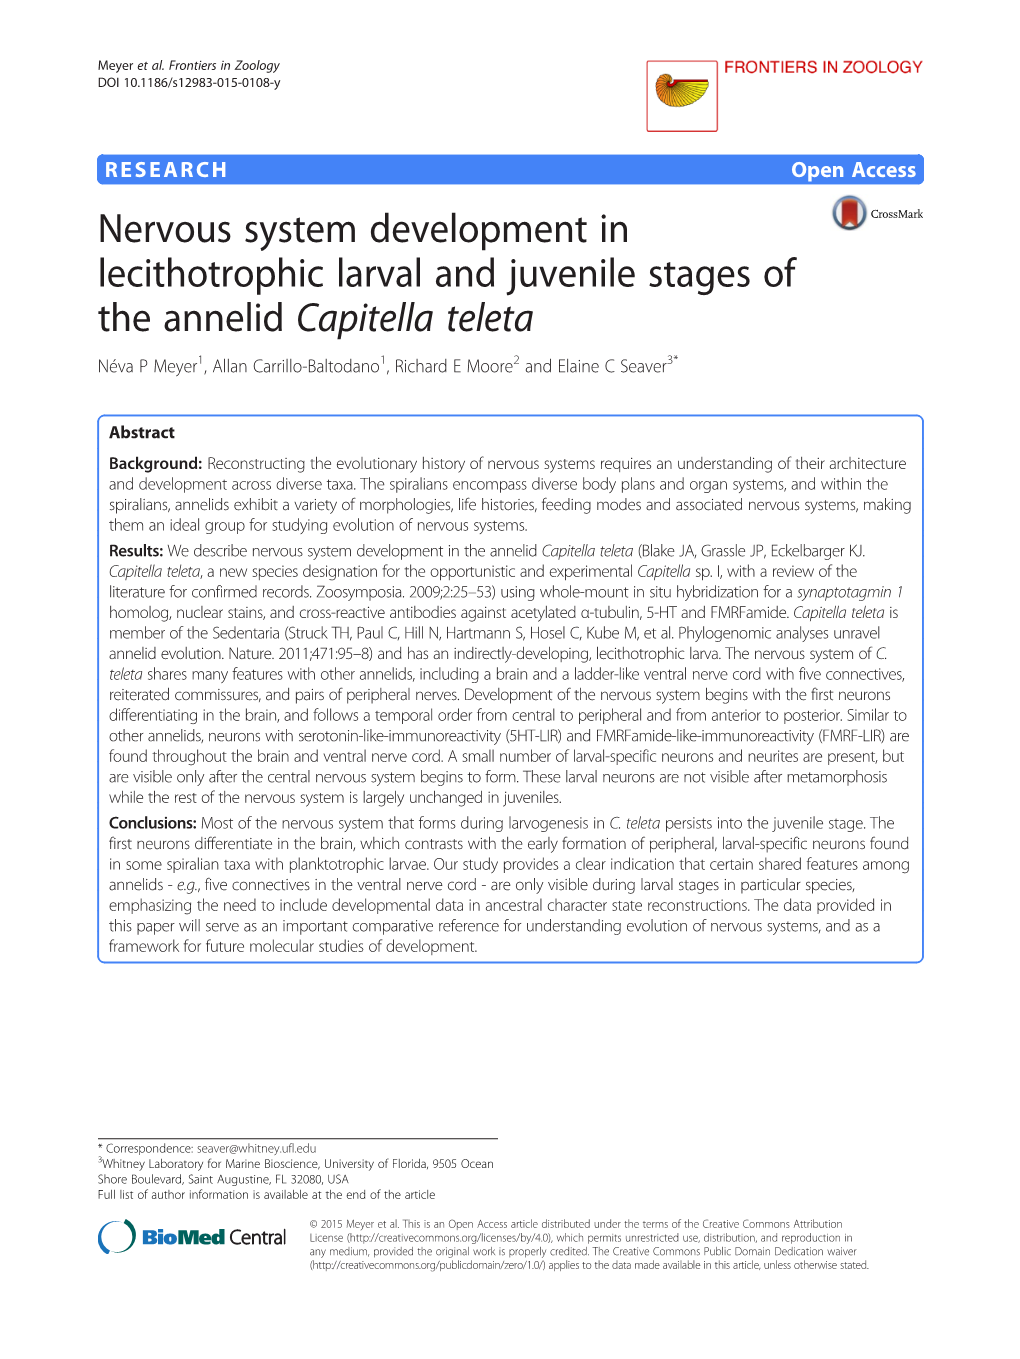 Nervous System Development in Lecithotrophic Larval and Juvenile